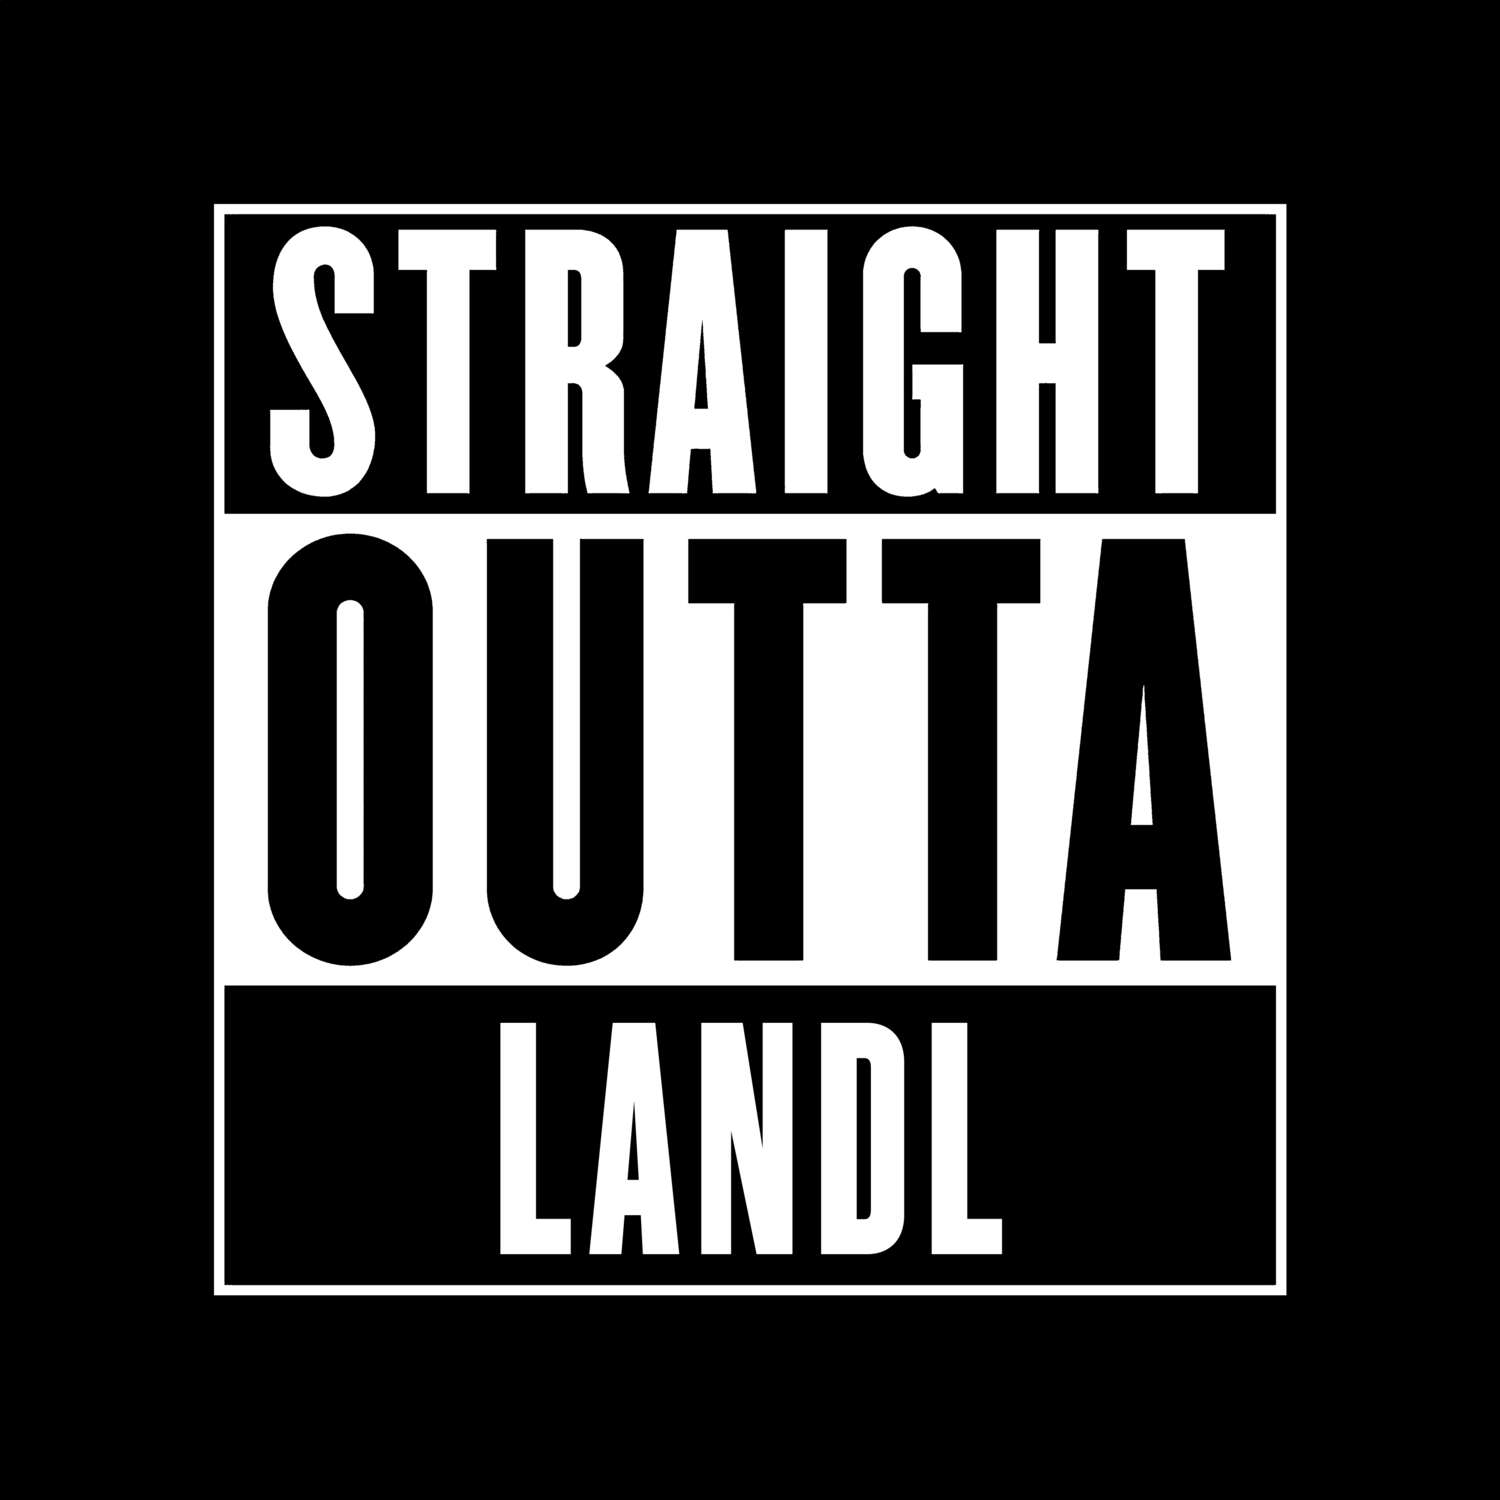 Landl T-Shirt »Straight Outta«